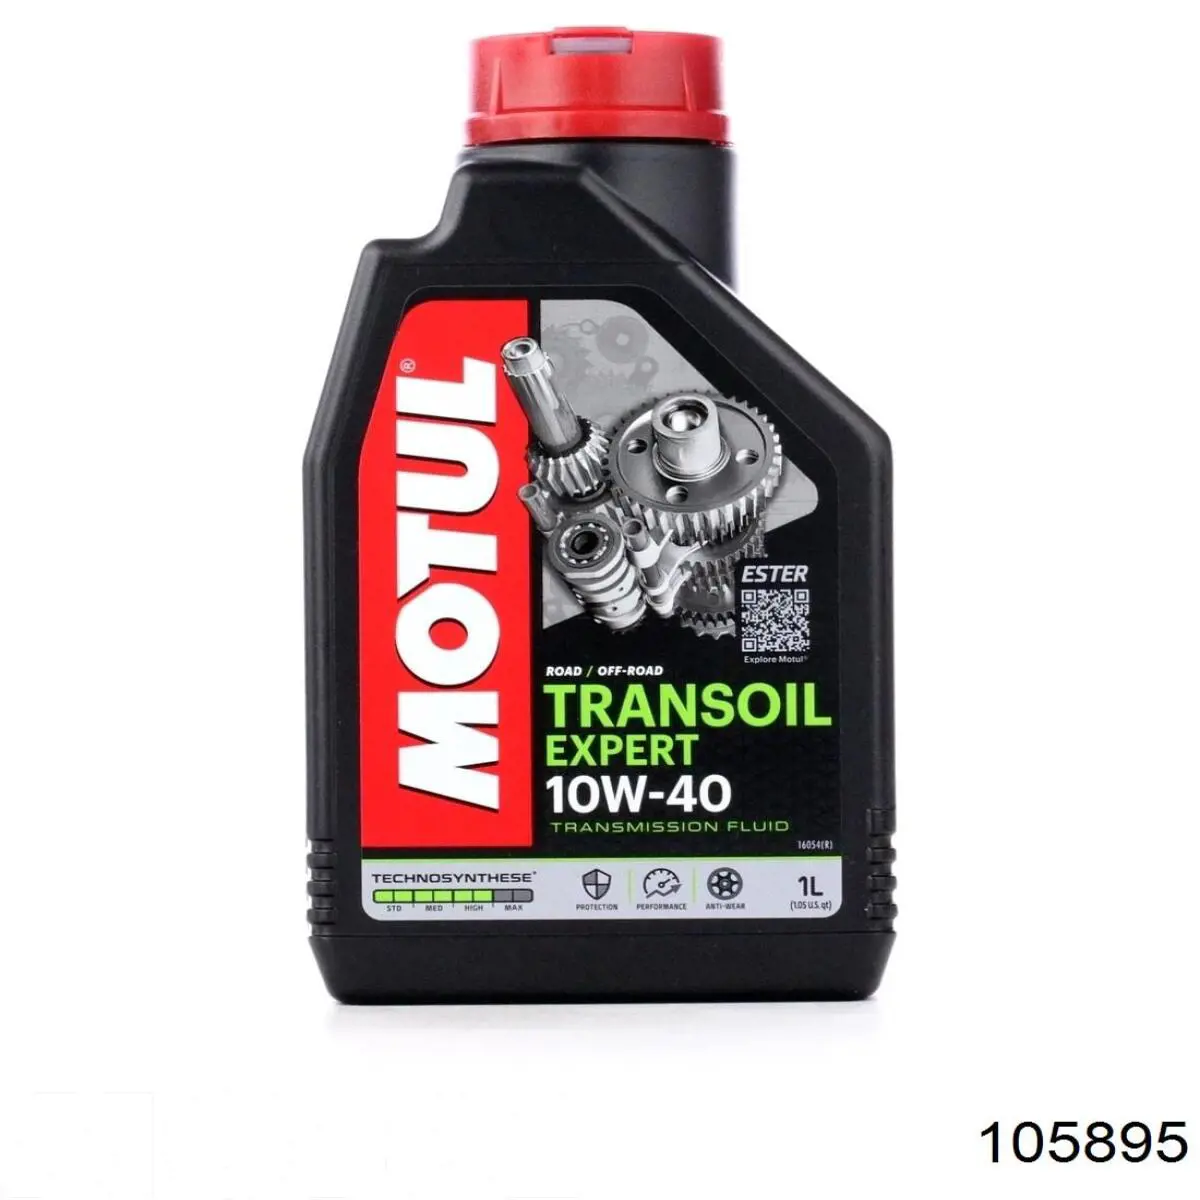  Масло трансмиссионное Motul Transoil Expert 10W-40 GL-4 1 л (100963)